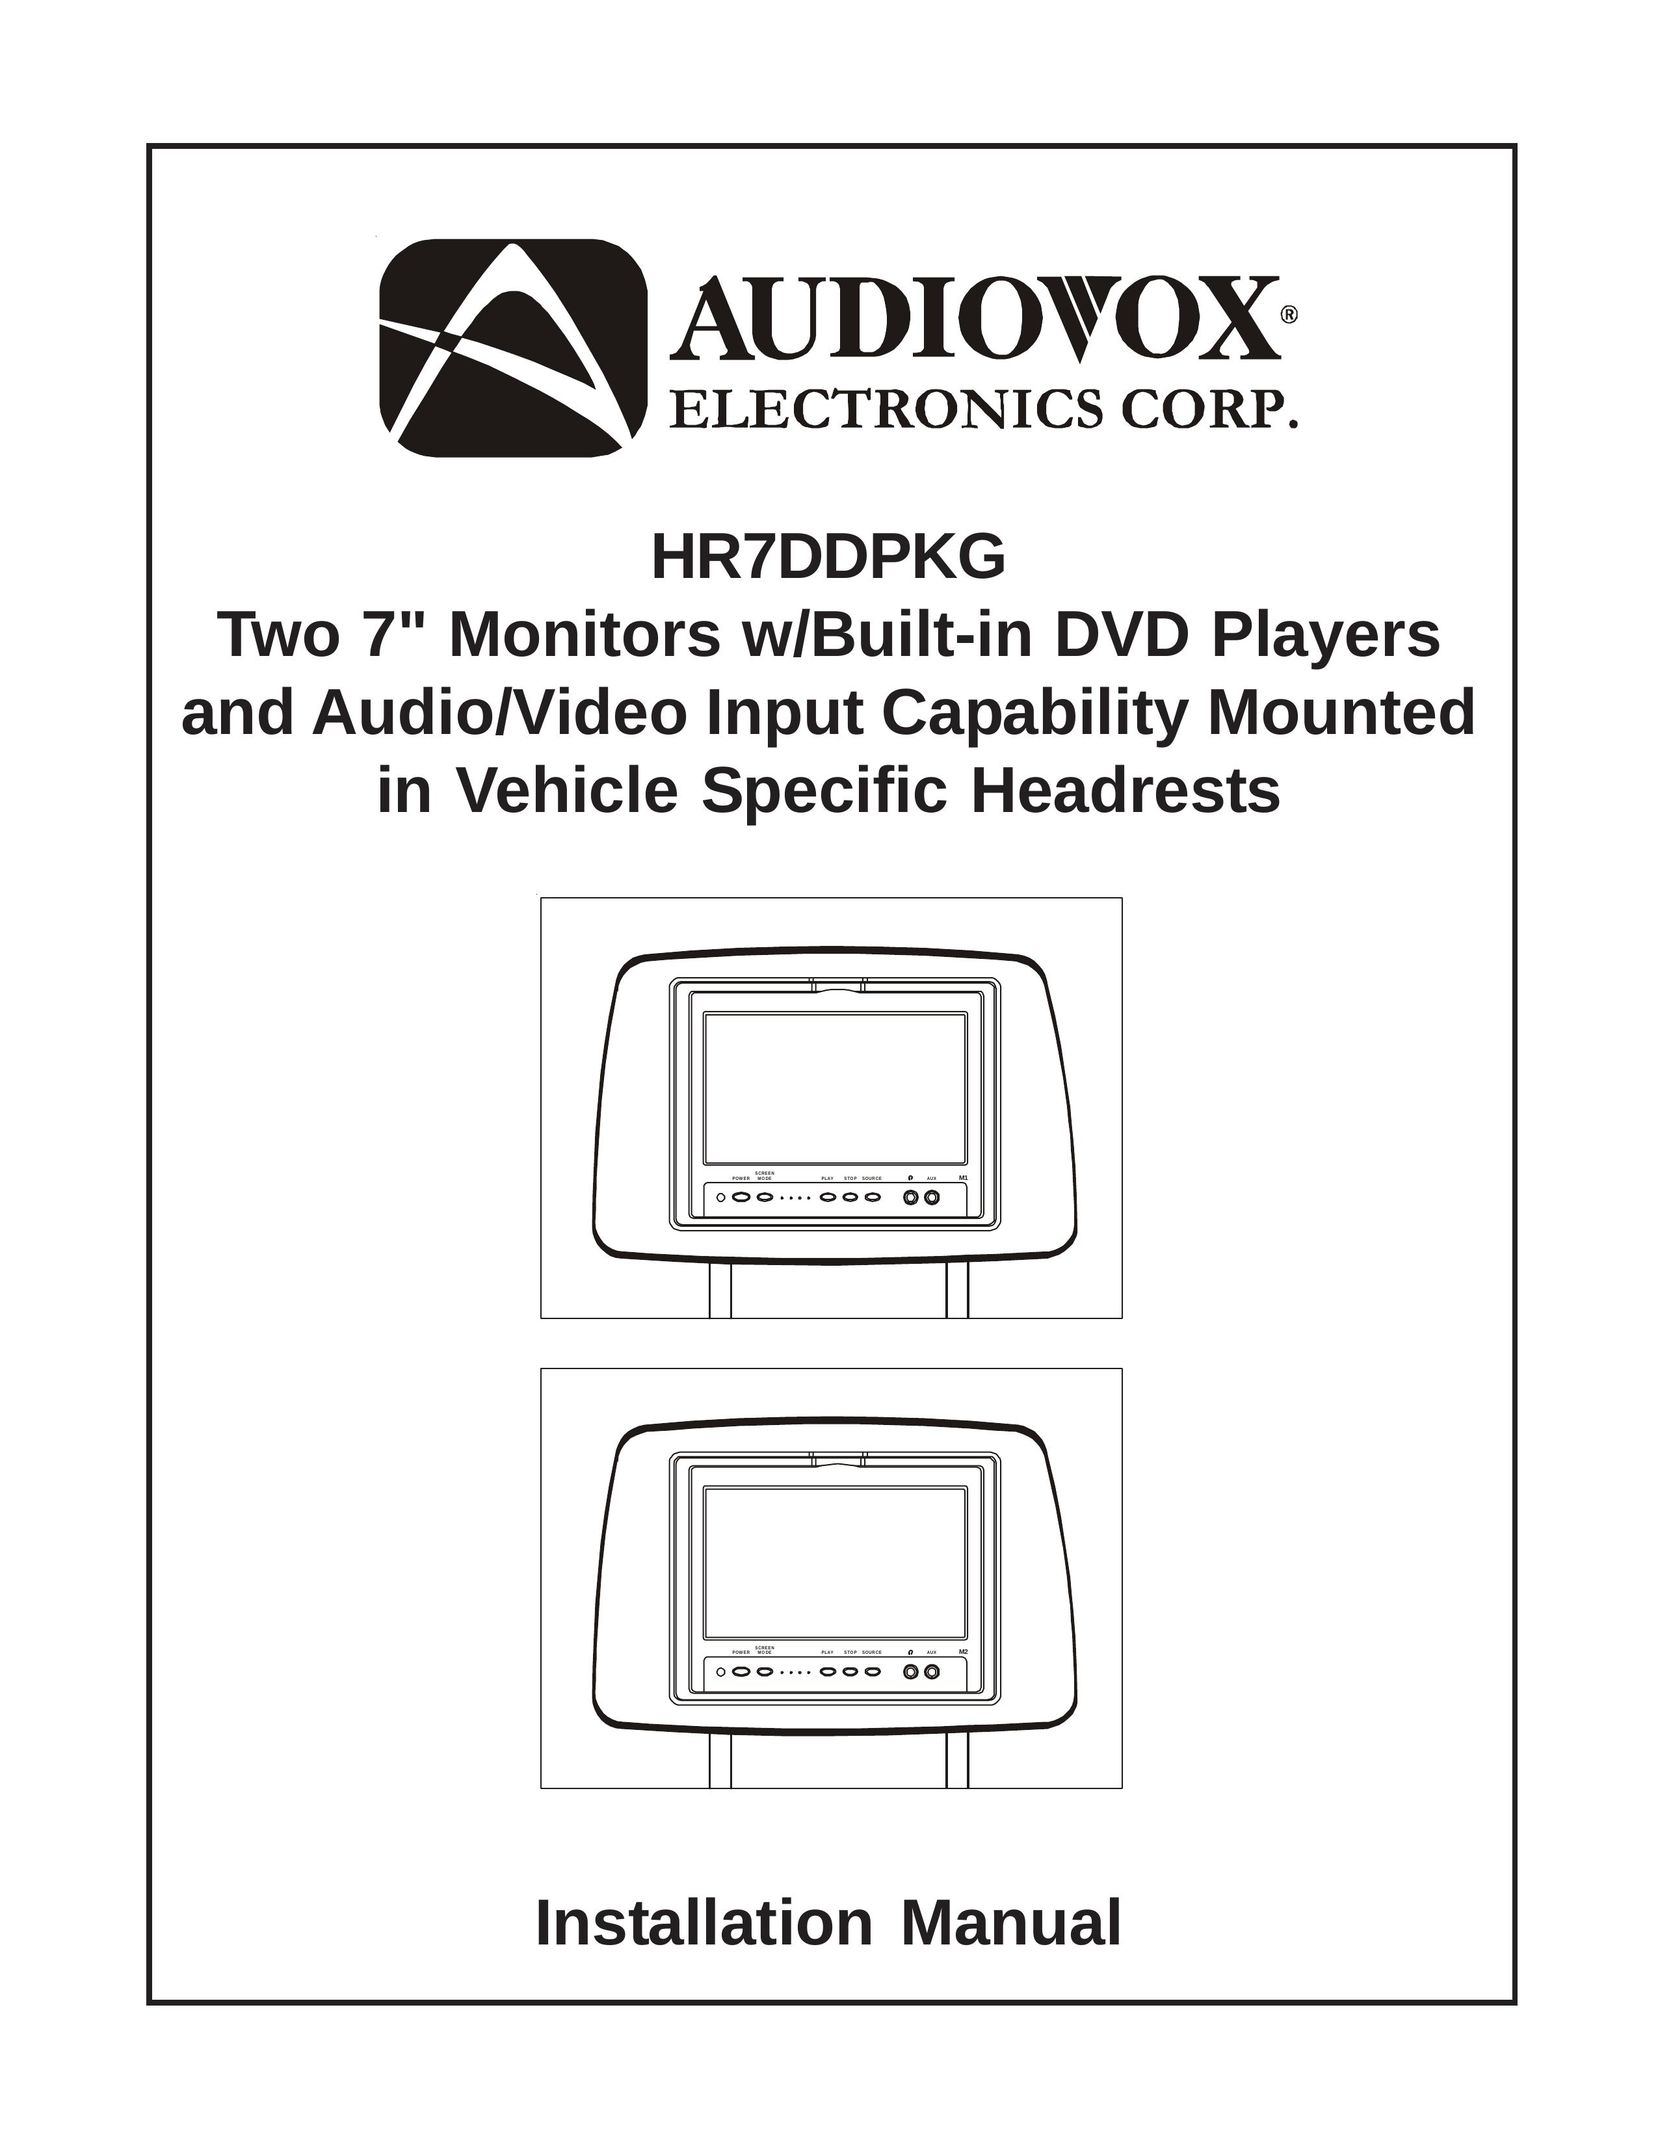 Audiovox HR7DDPKG Car Stereo System User Manual